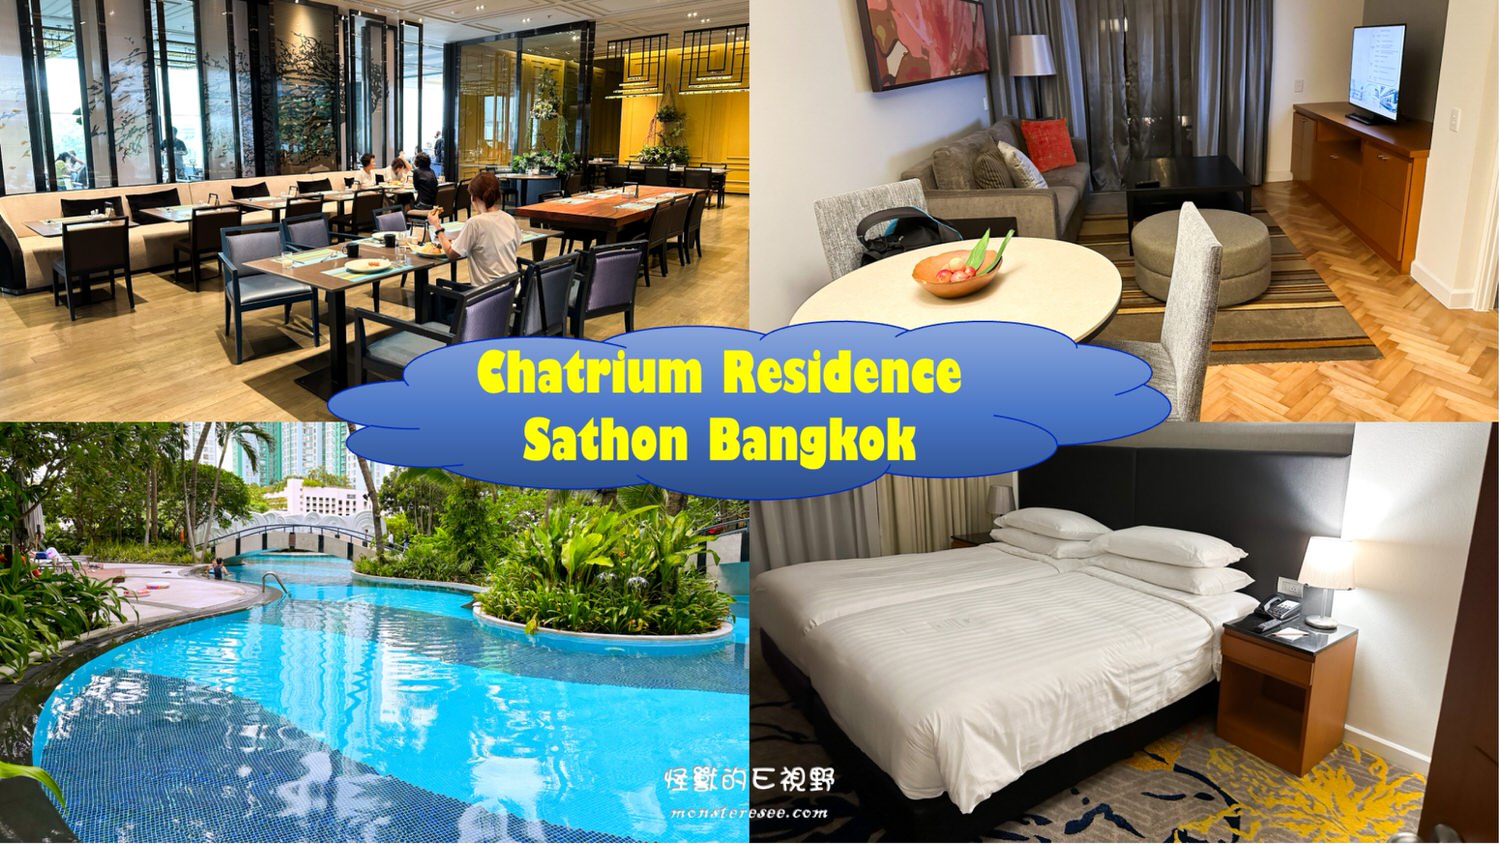 Chatrium Residence Sathon Bangkok0